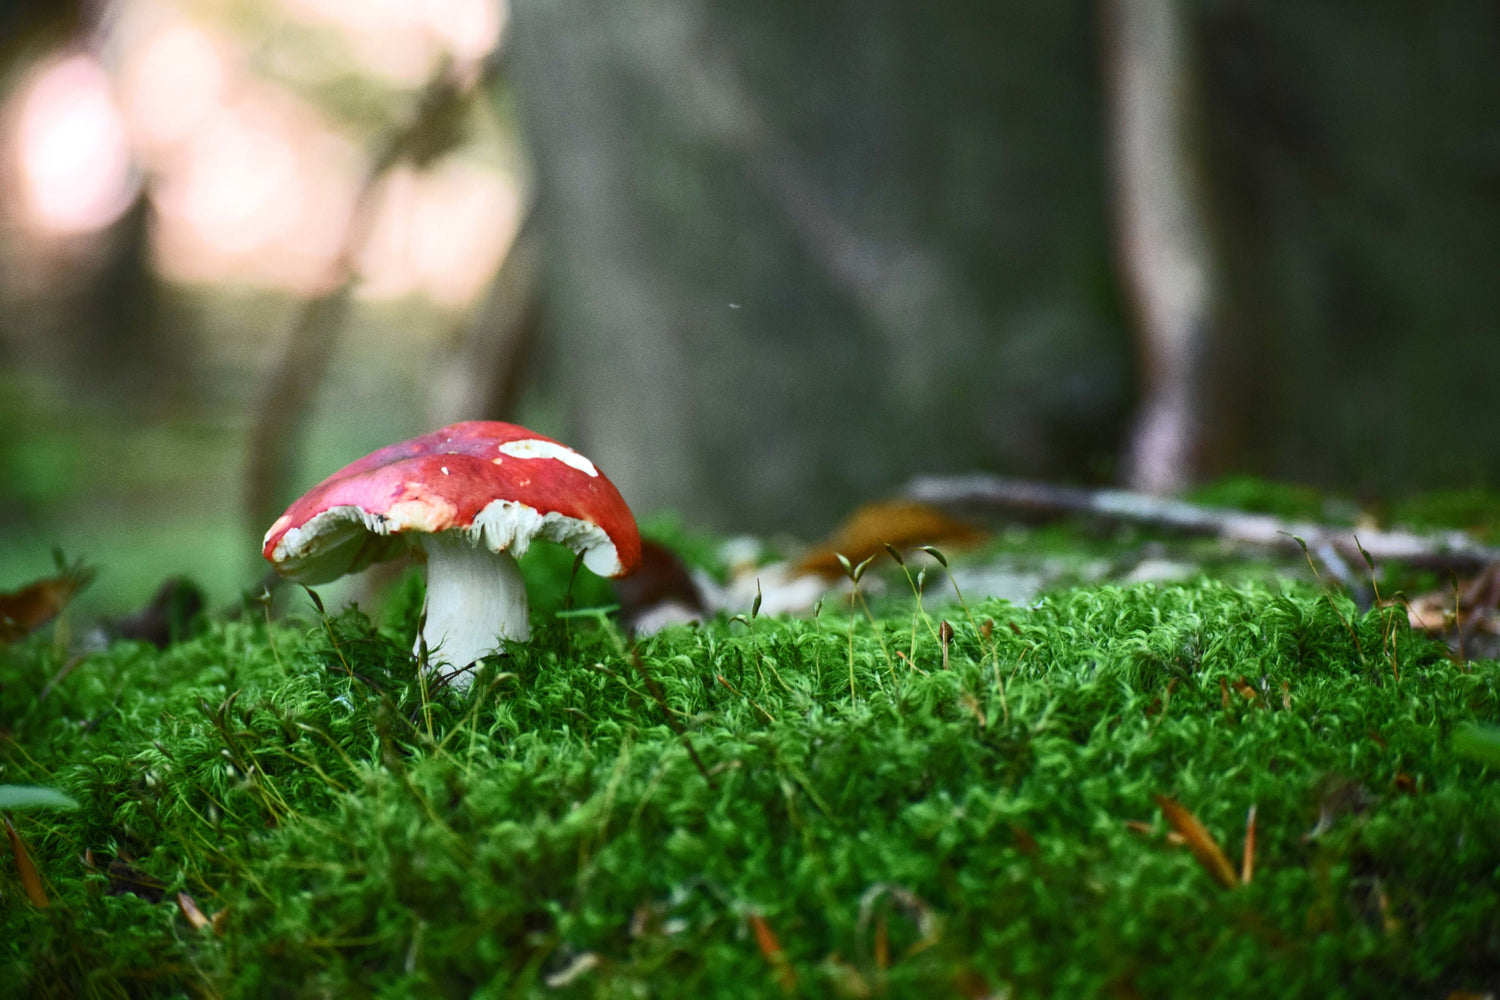 a red mushroom in a field